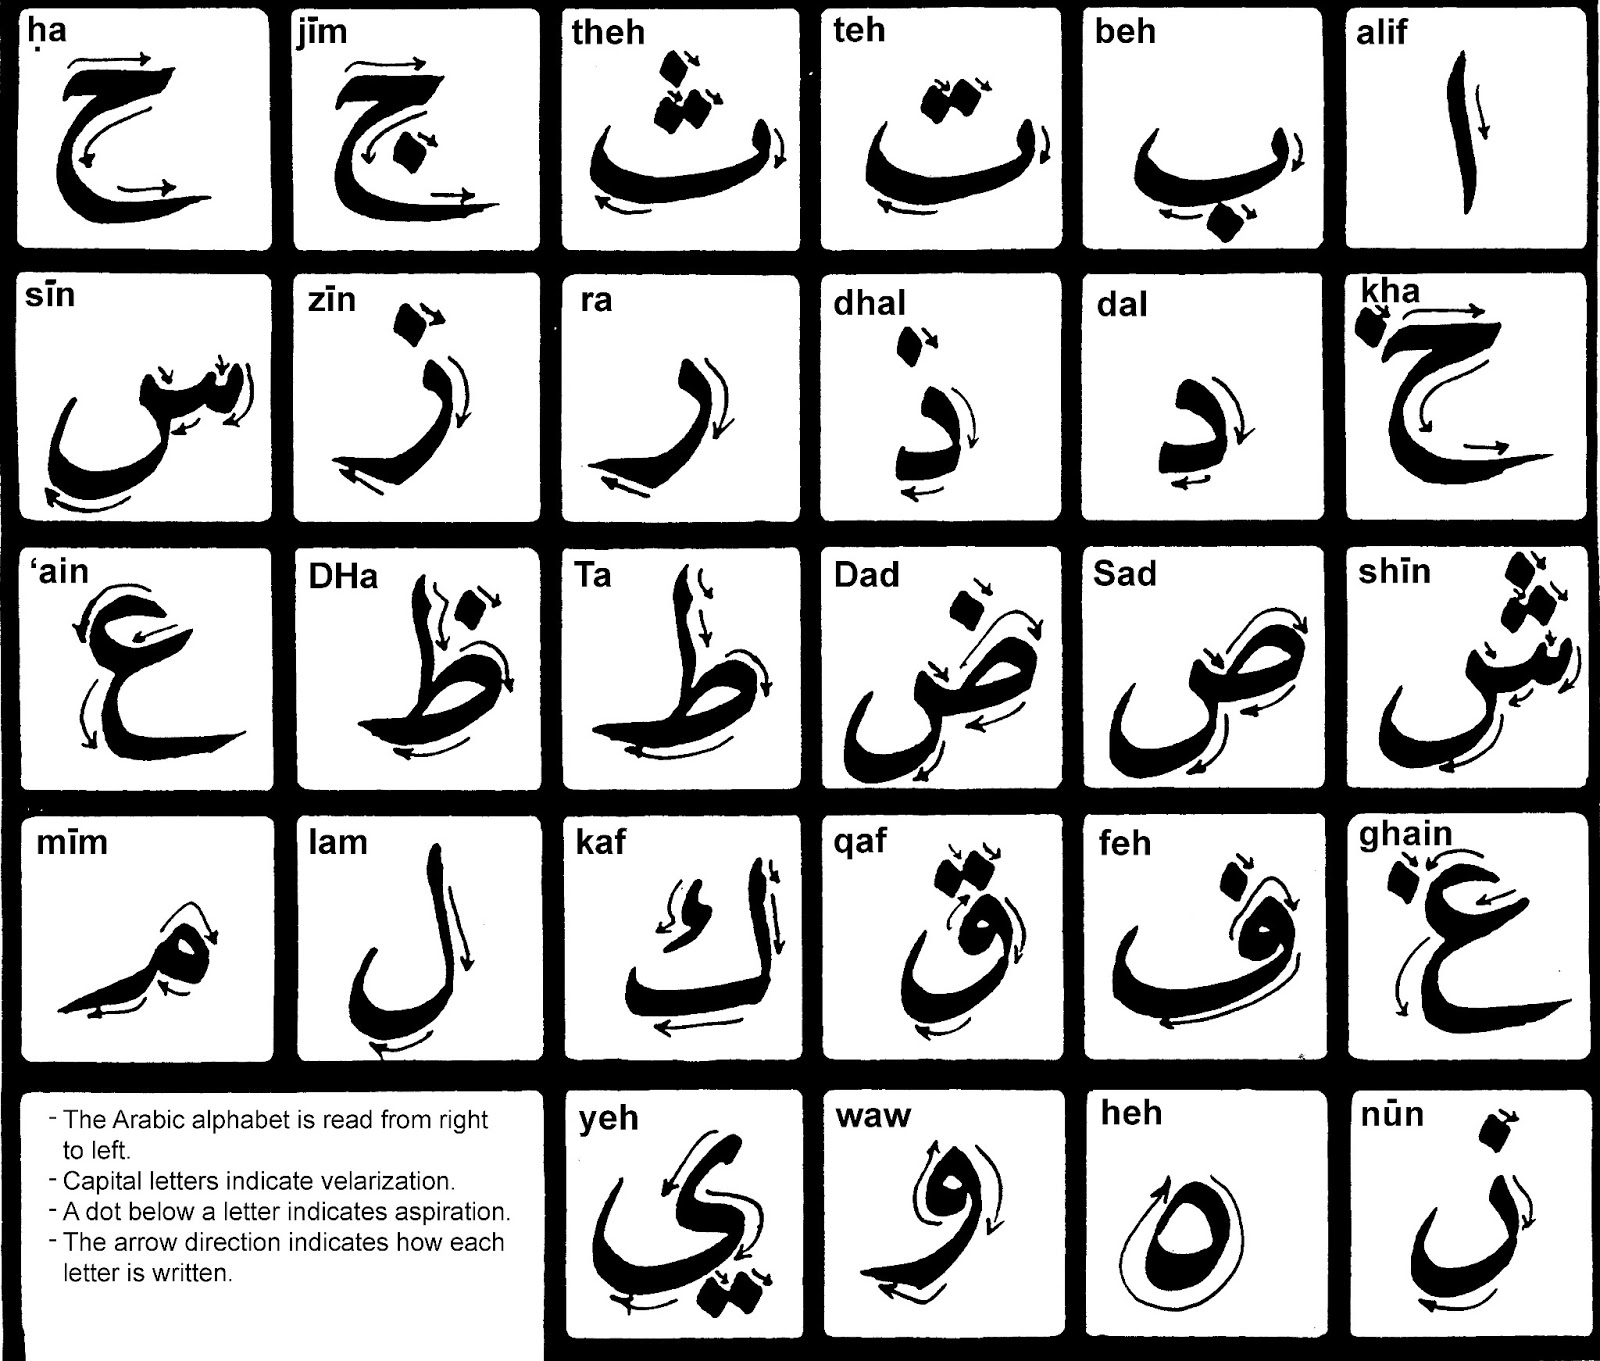 The Polyglot Blog Arabic Alphabet in Photos, الأبجدية